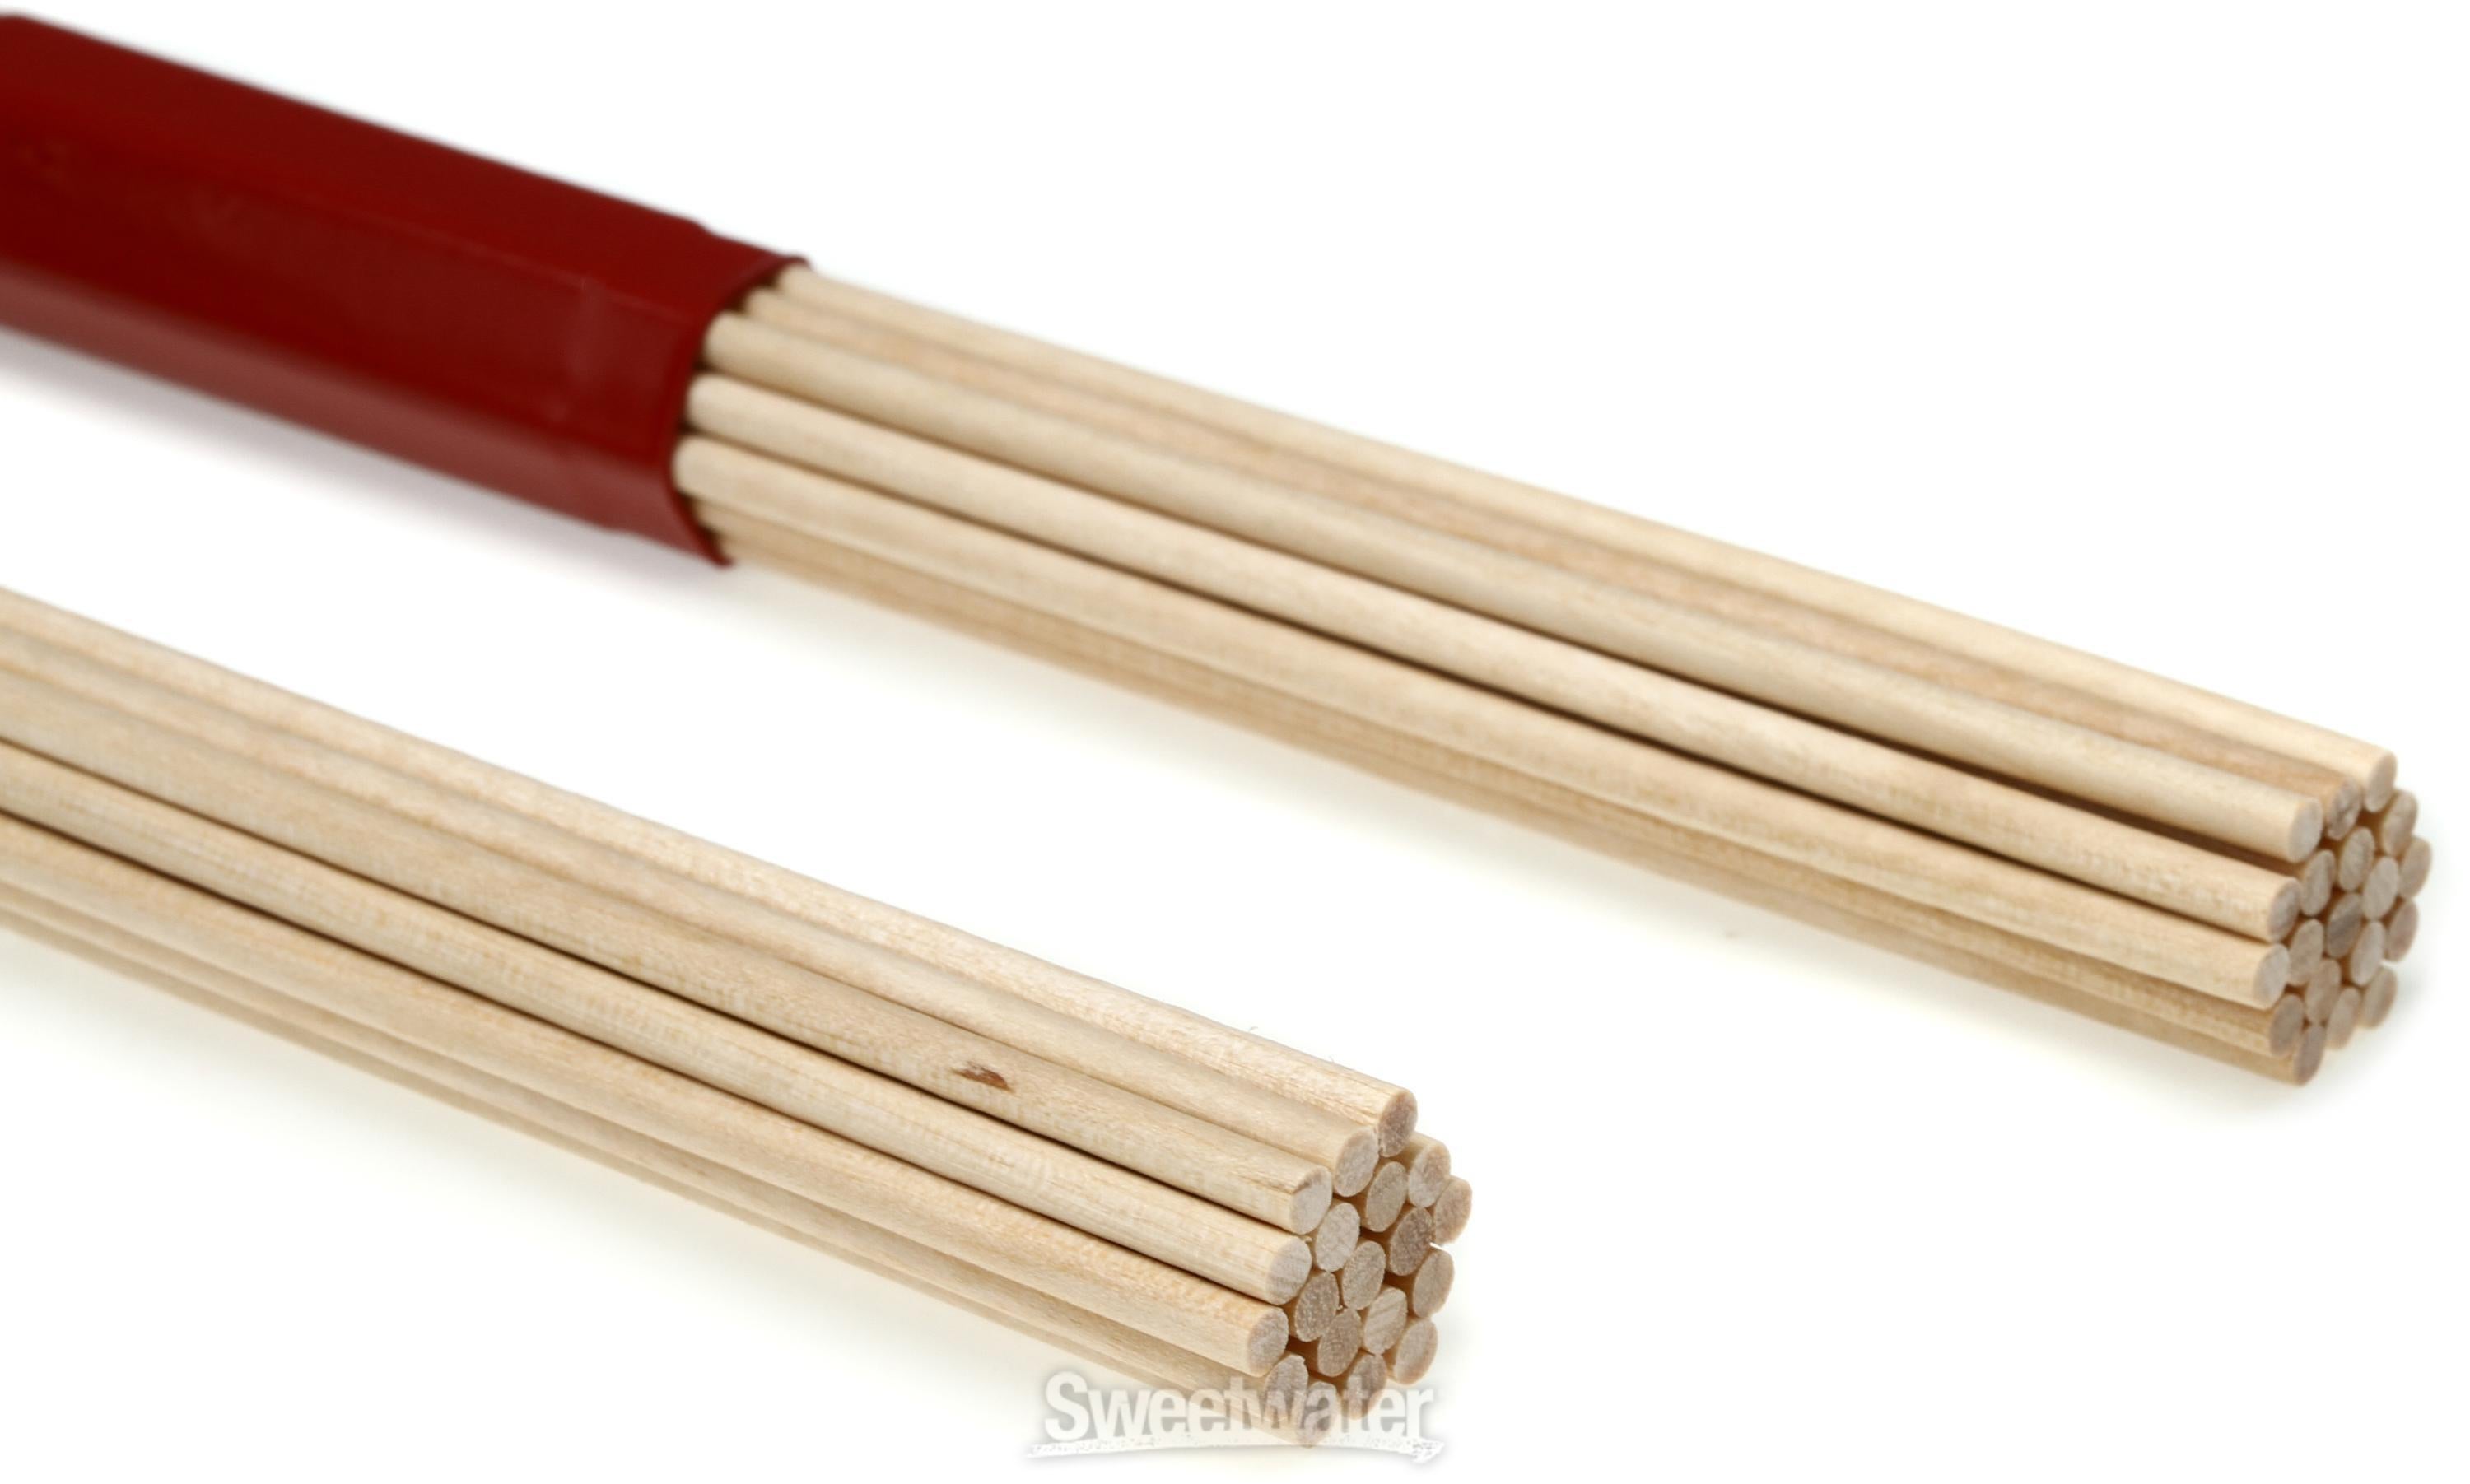 Promark Hot Rods Bundled-dowel Drumsticks | Sweetwater